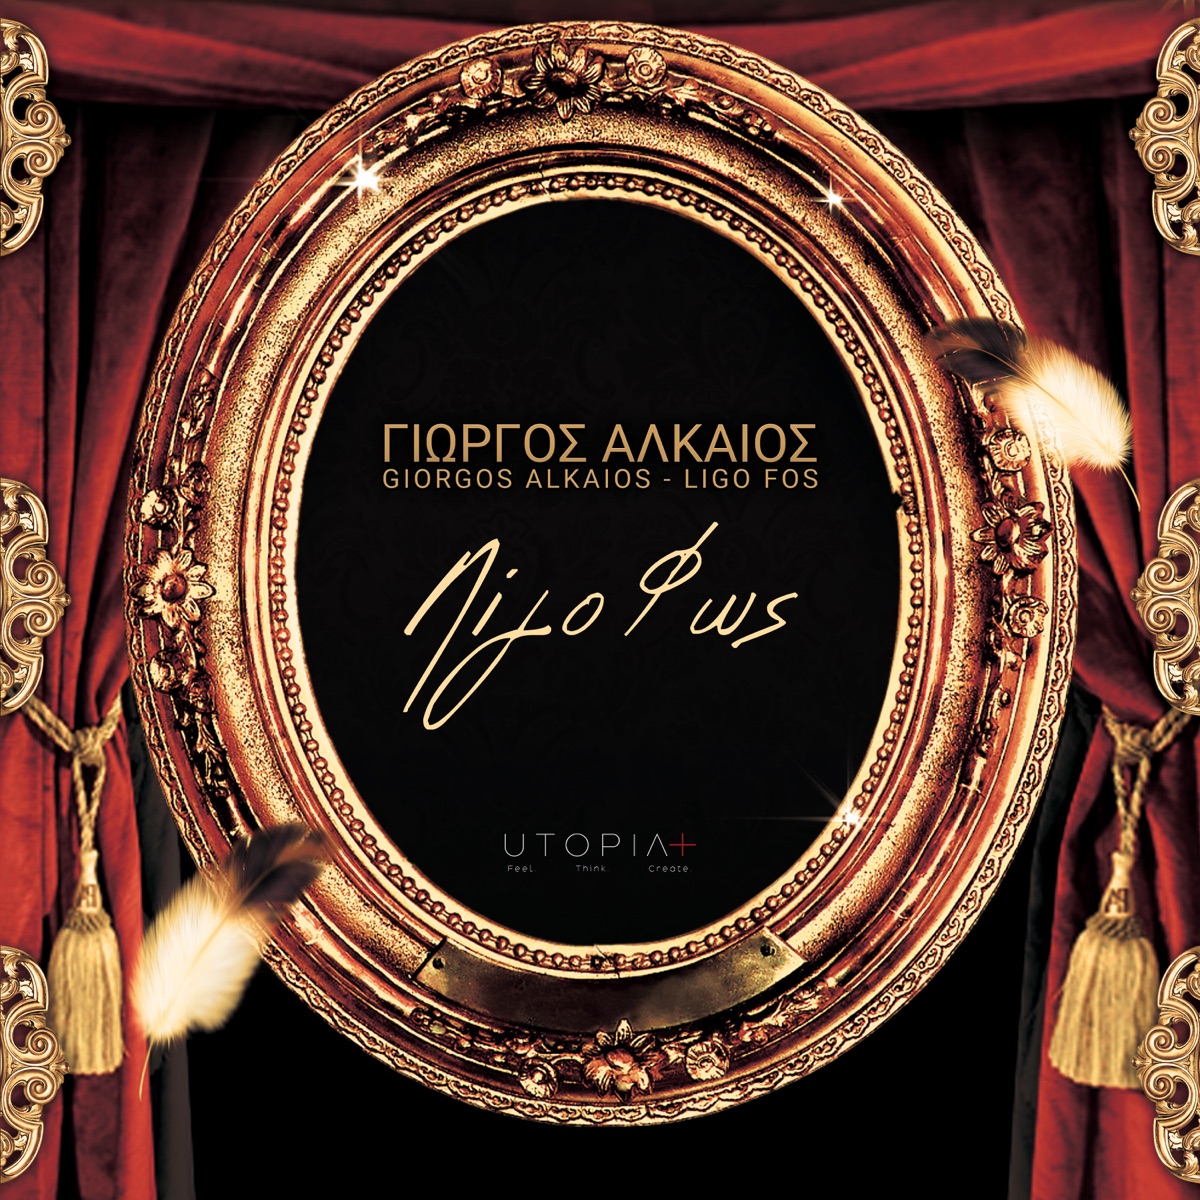 Alkaios Live Tour - Album by Giorgos Alkaios - Apple Music